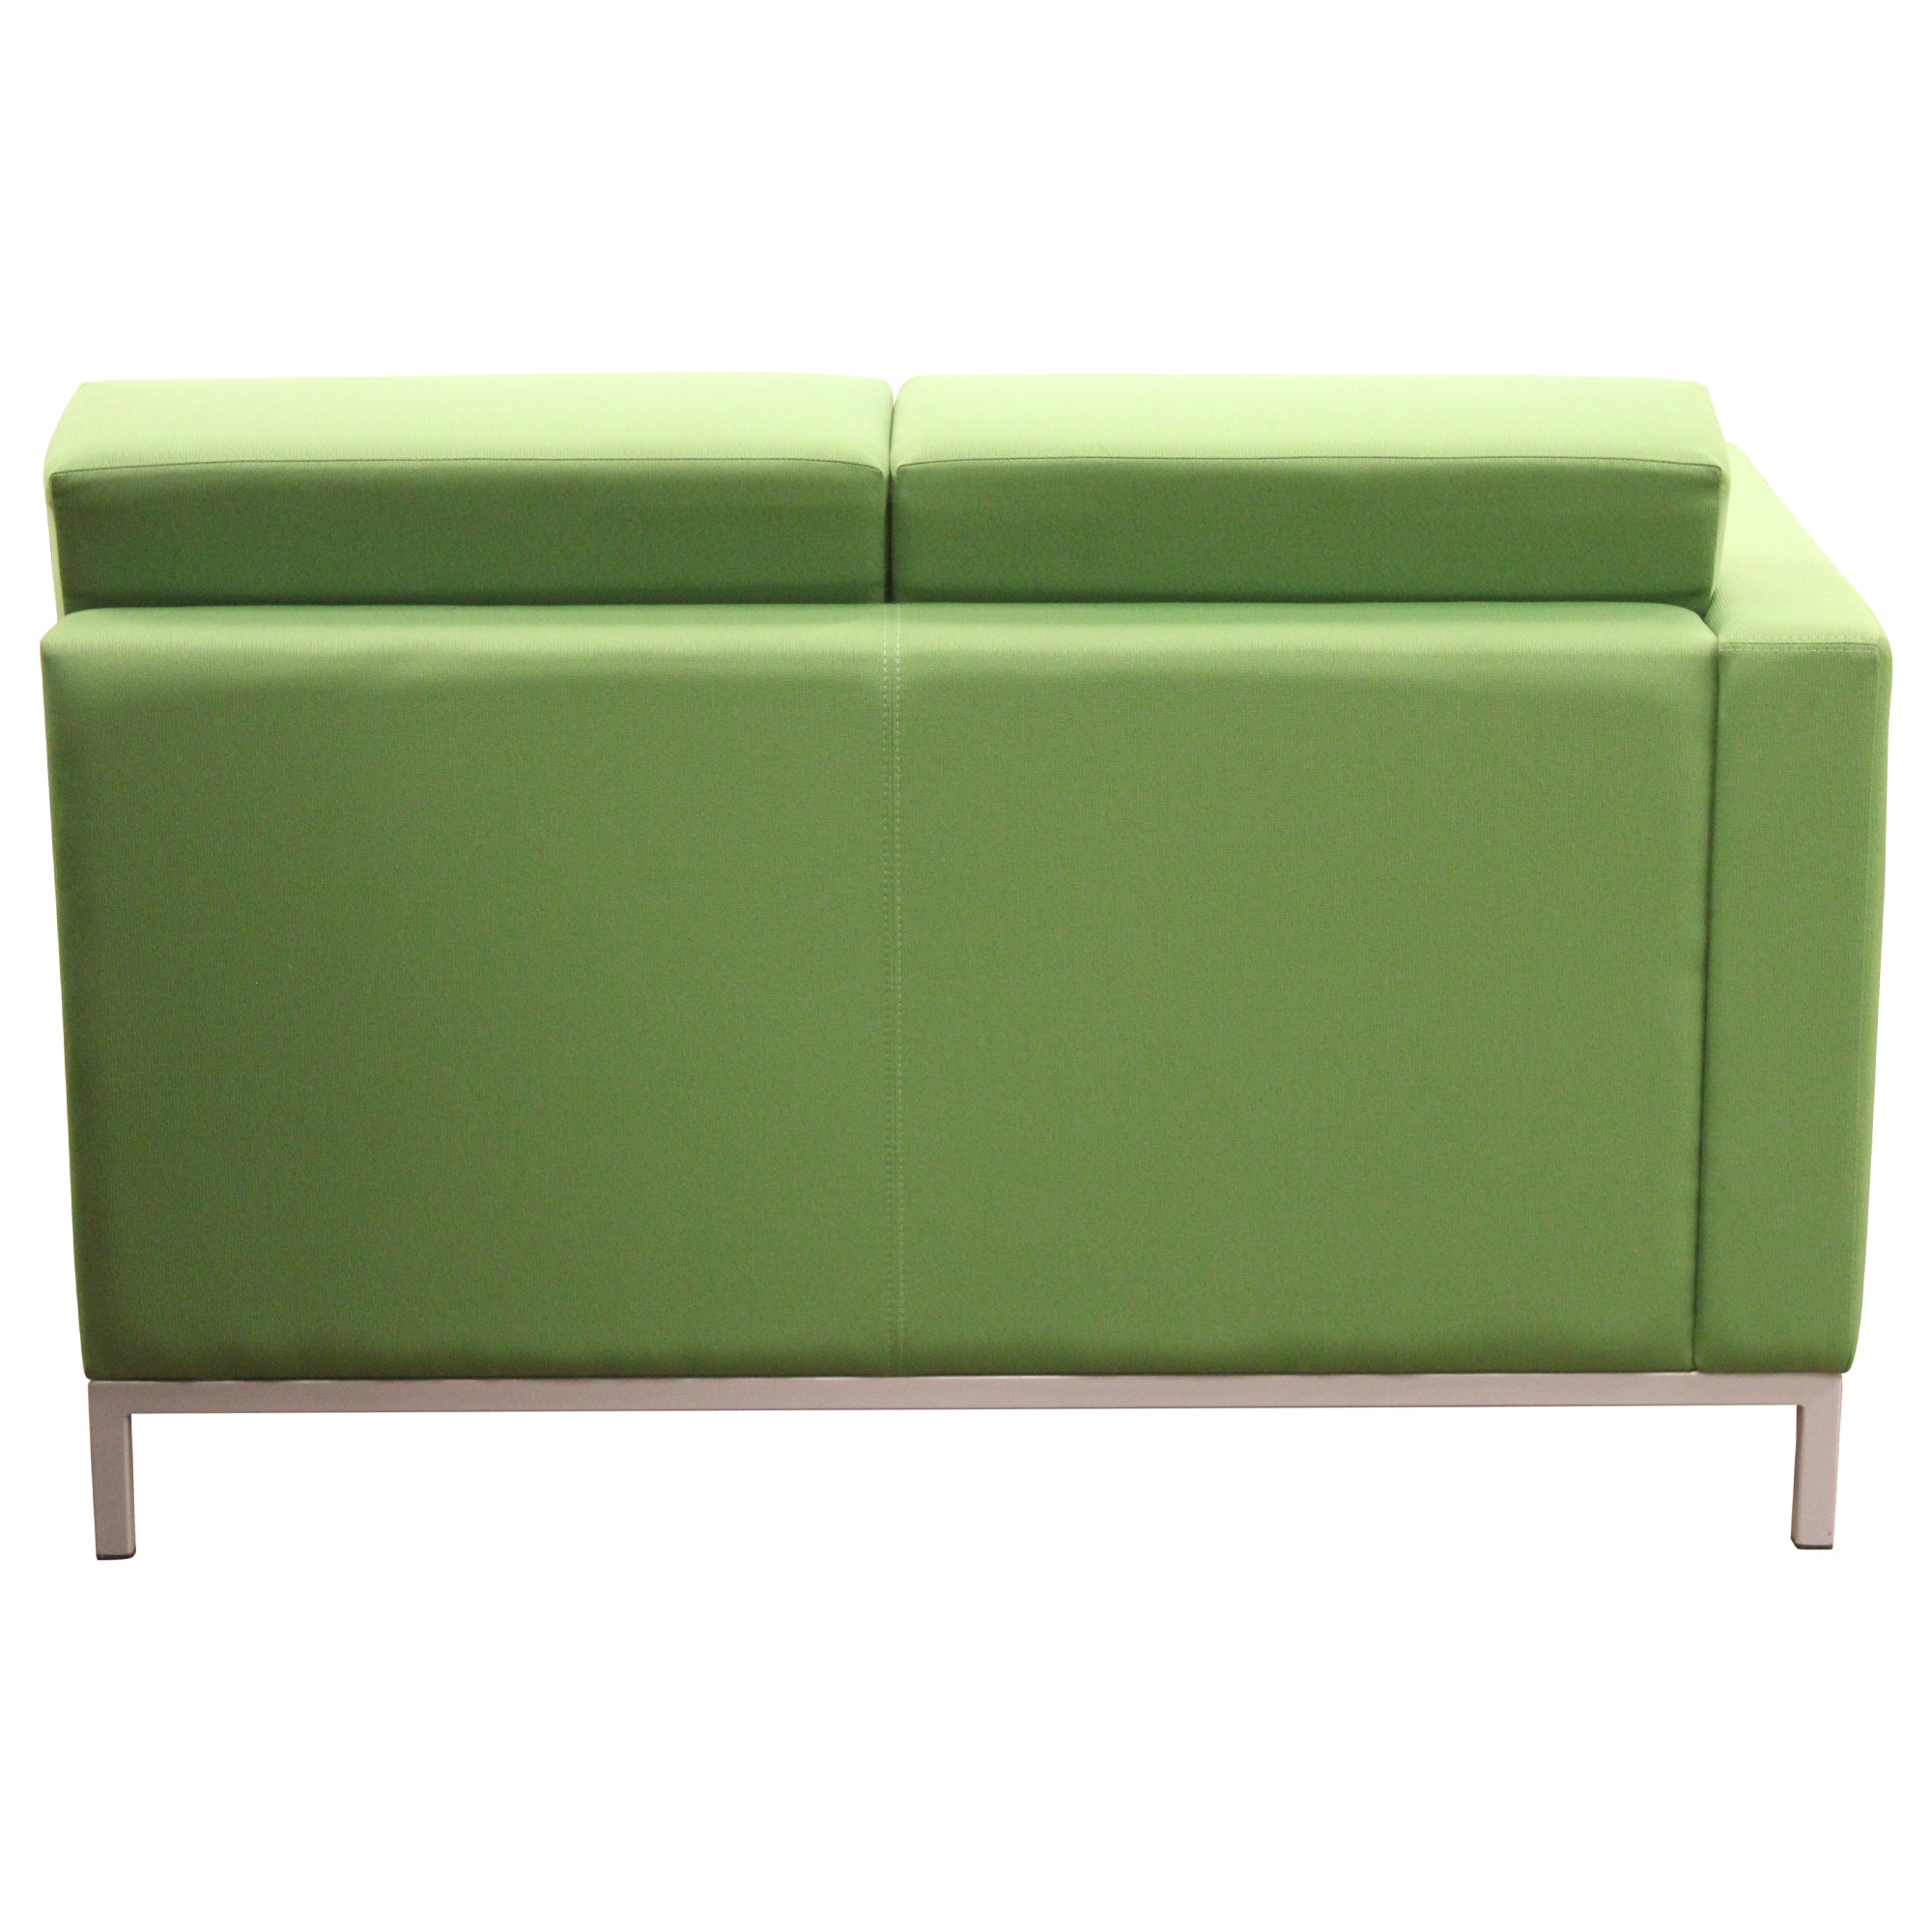 Global Citi Square 2-Seat Sofa, Green - Preowned